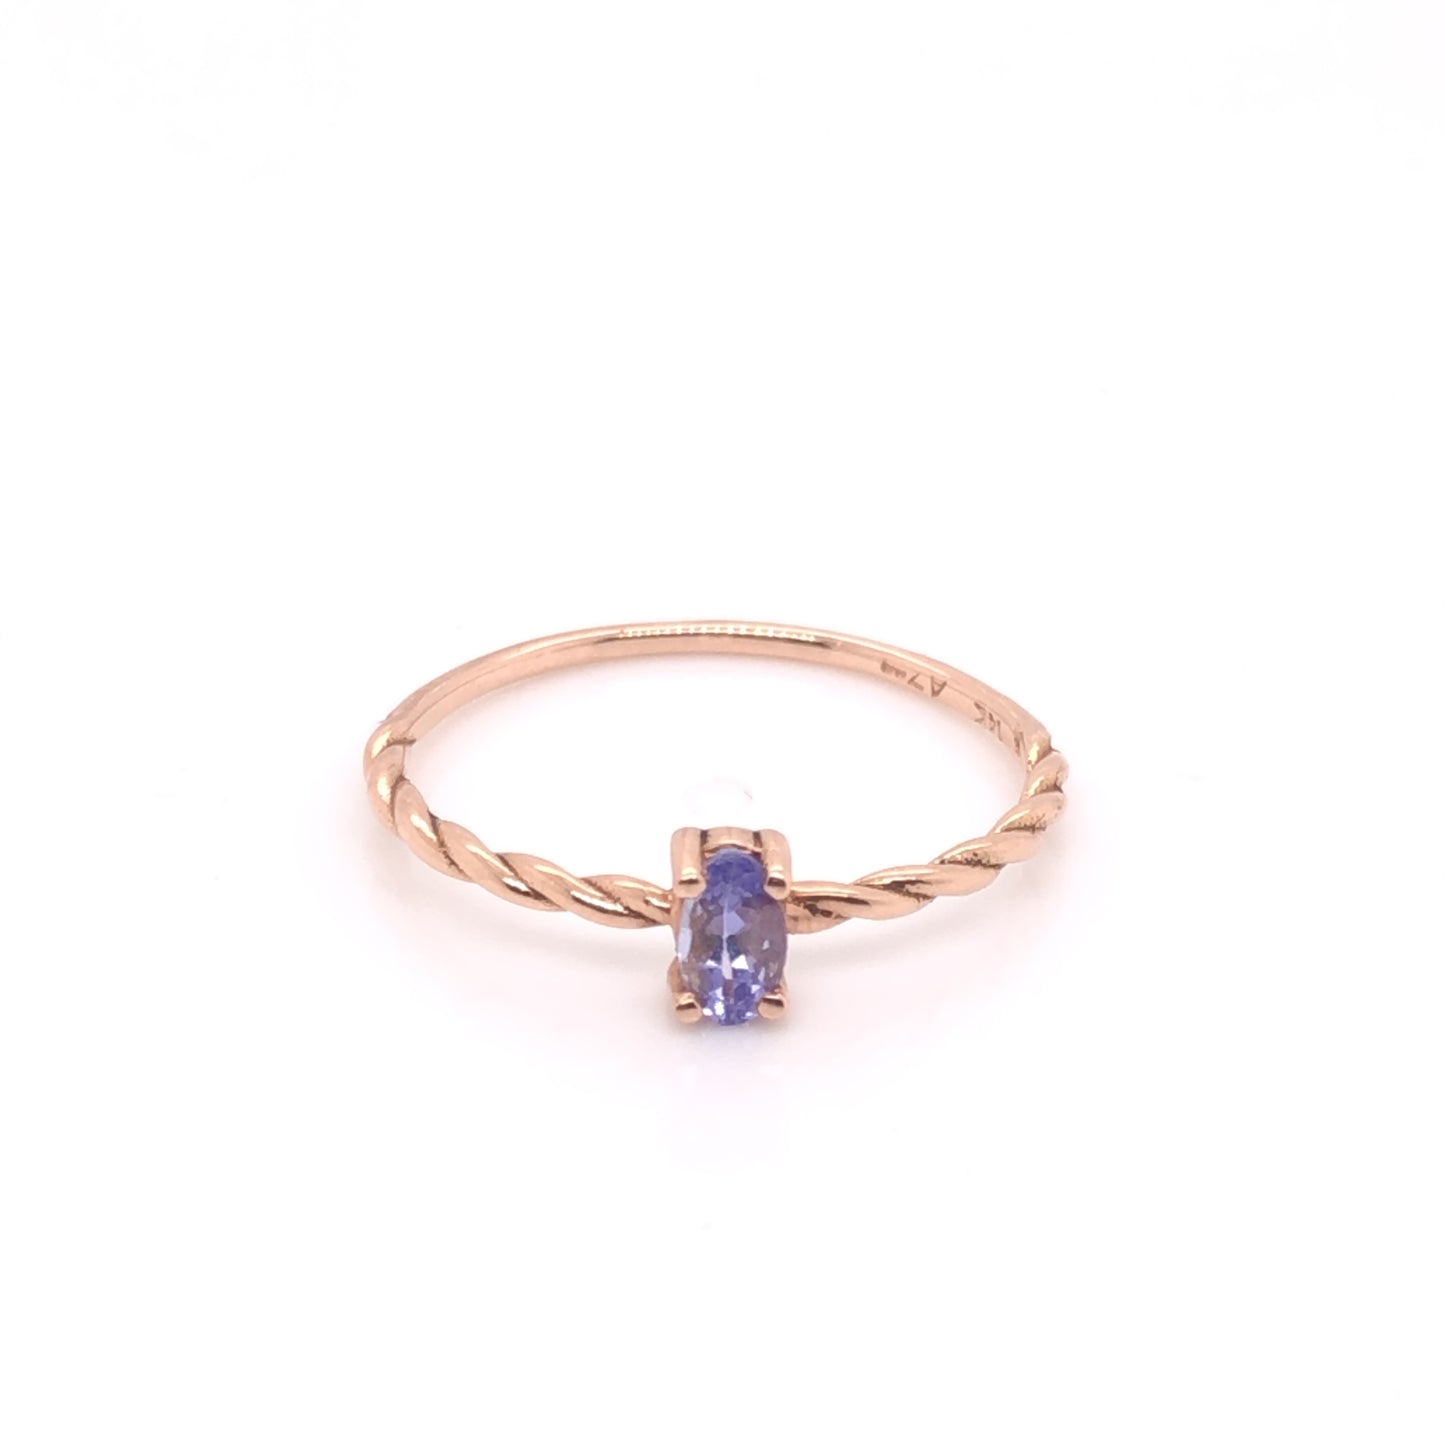 IMMEDIATE DELIVERY / Carolina Tanzanite Ring / 14k Rose Gold / Size 6.5